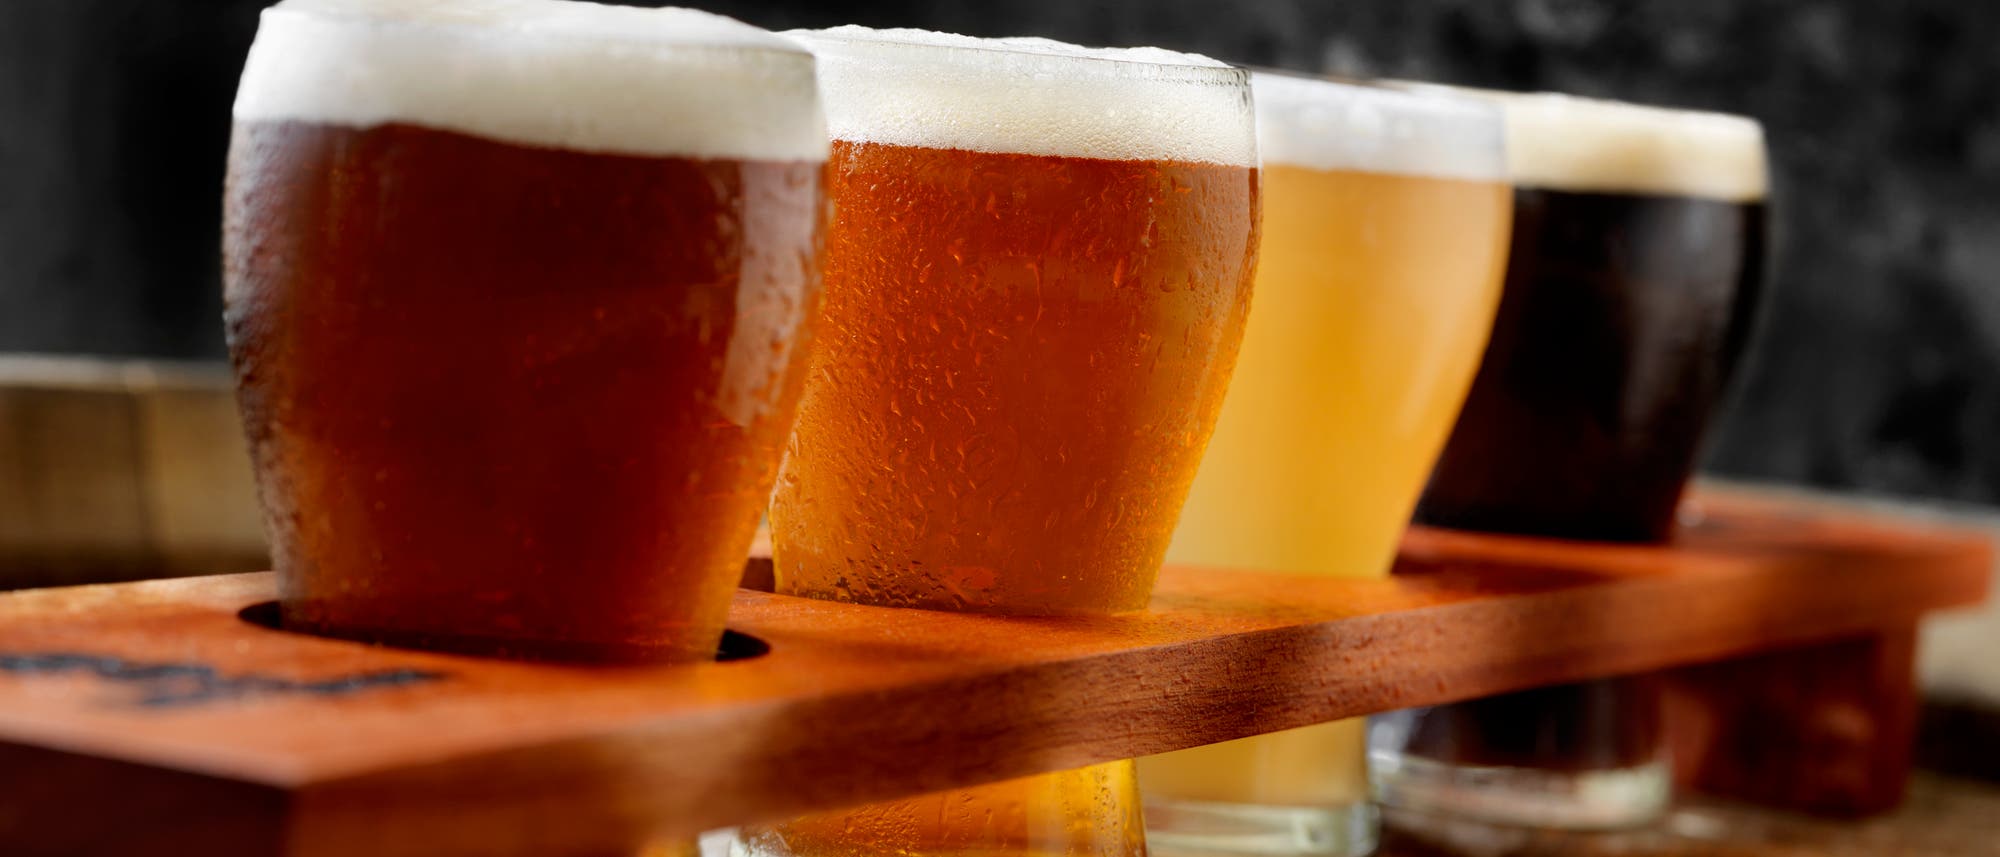 Verschiedene Sorten Bier in Gläsern.